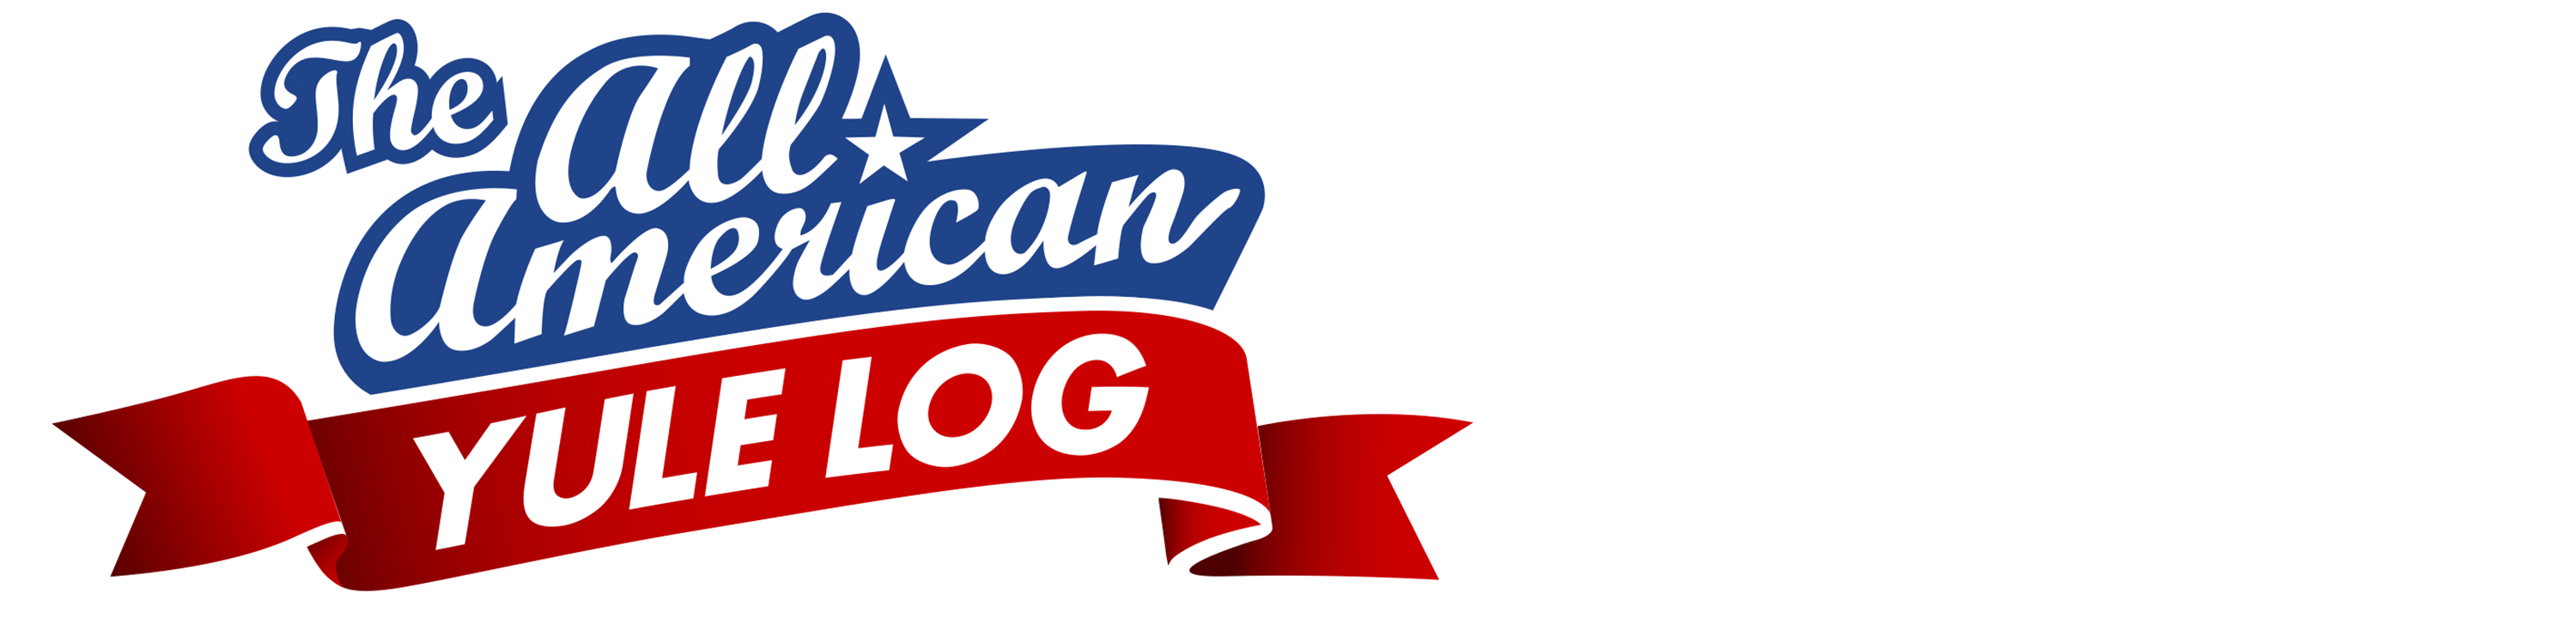 The All-American Yule Log logo